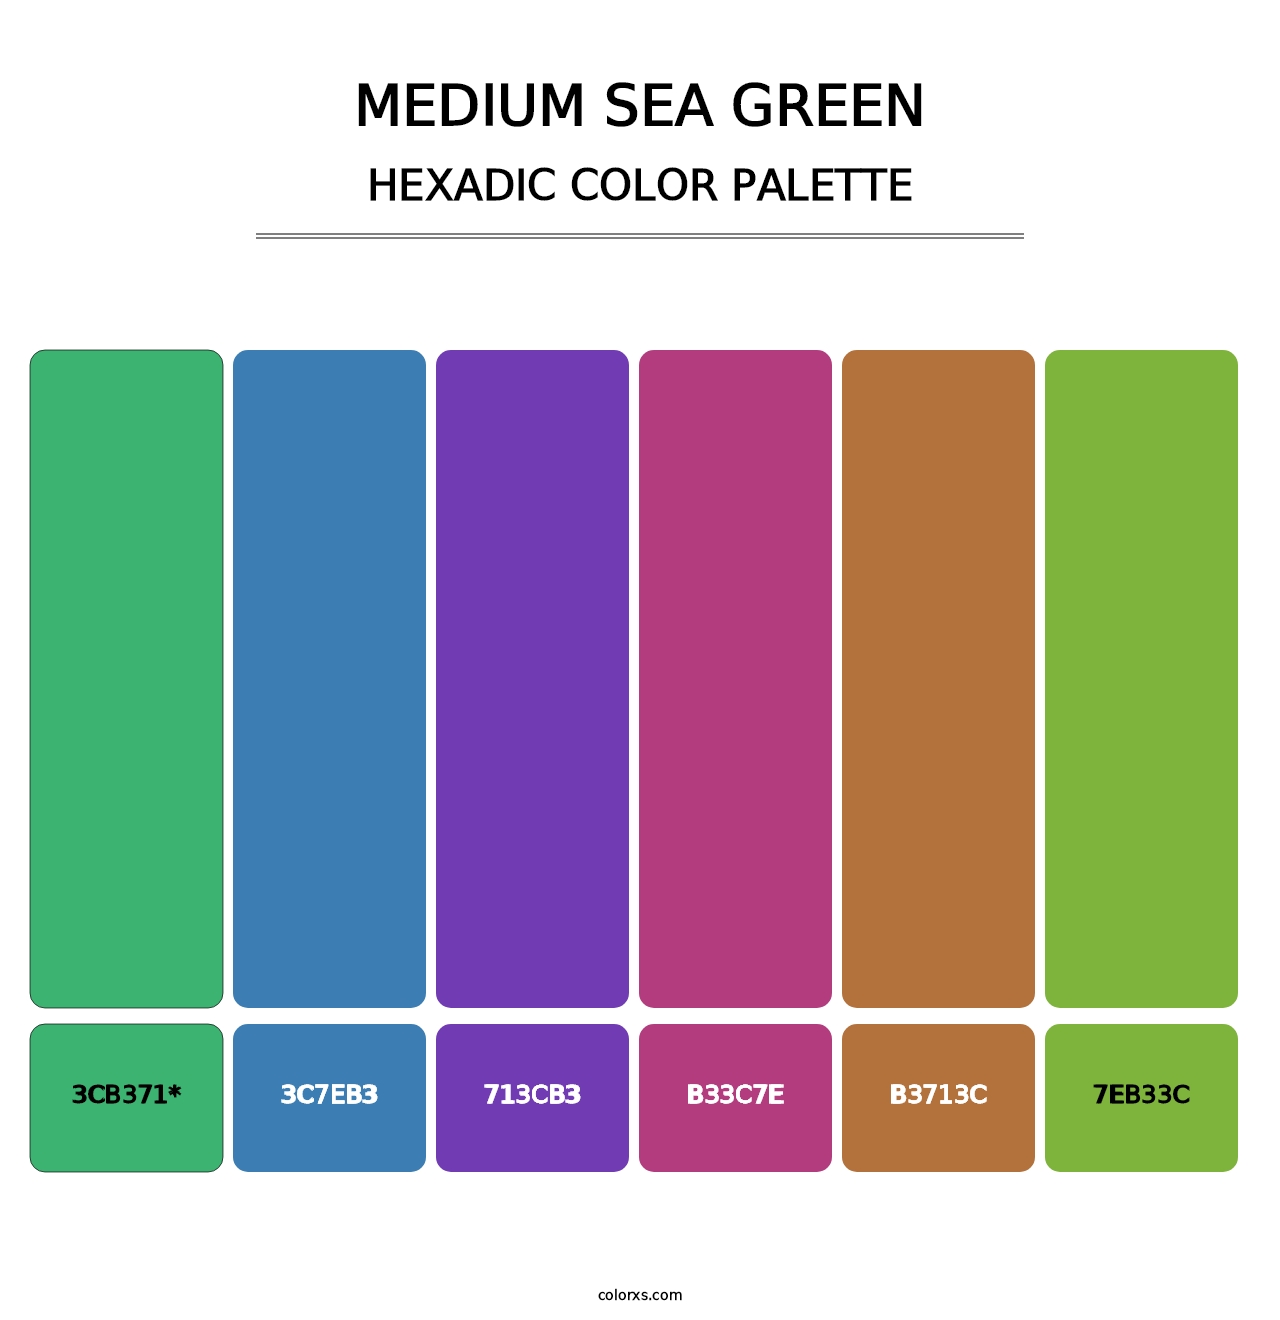 Medium Sea Green - Hexadic Color Palette